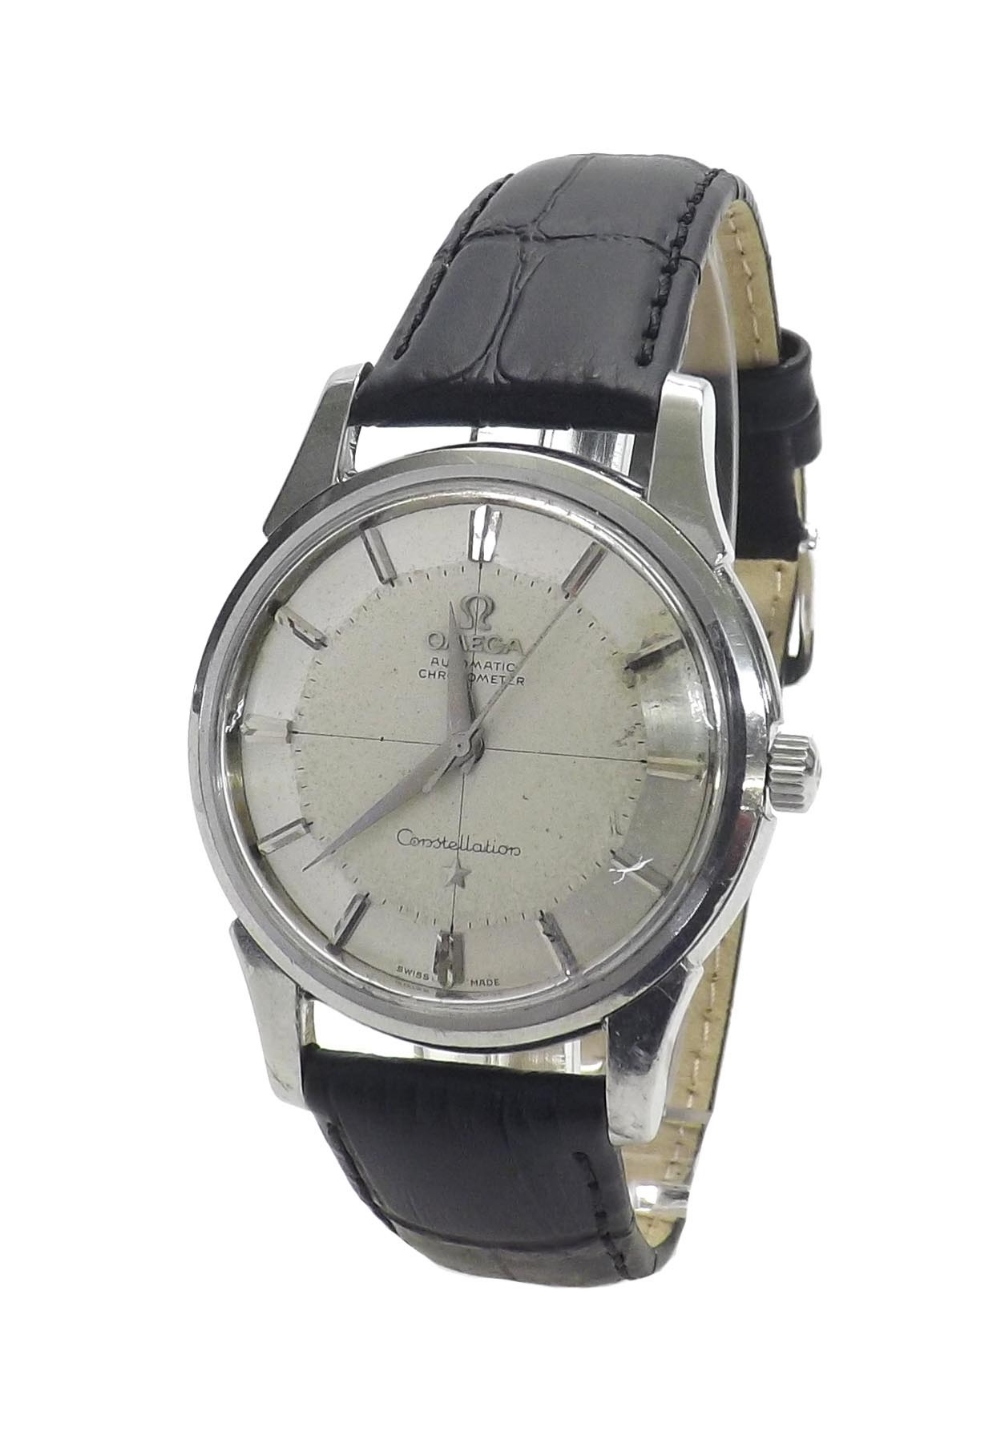 Omega Constellation Chronometer automatic stainless steel gentleman's wristwatch, circa 1960, case